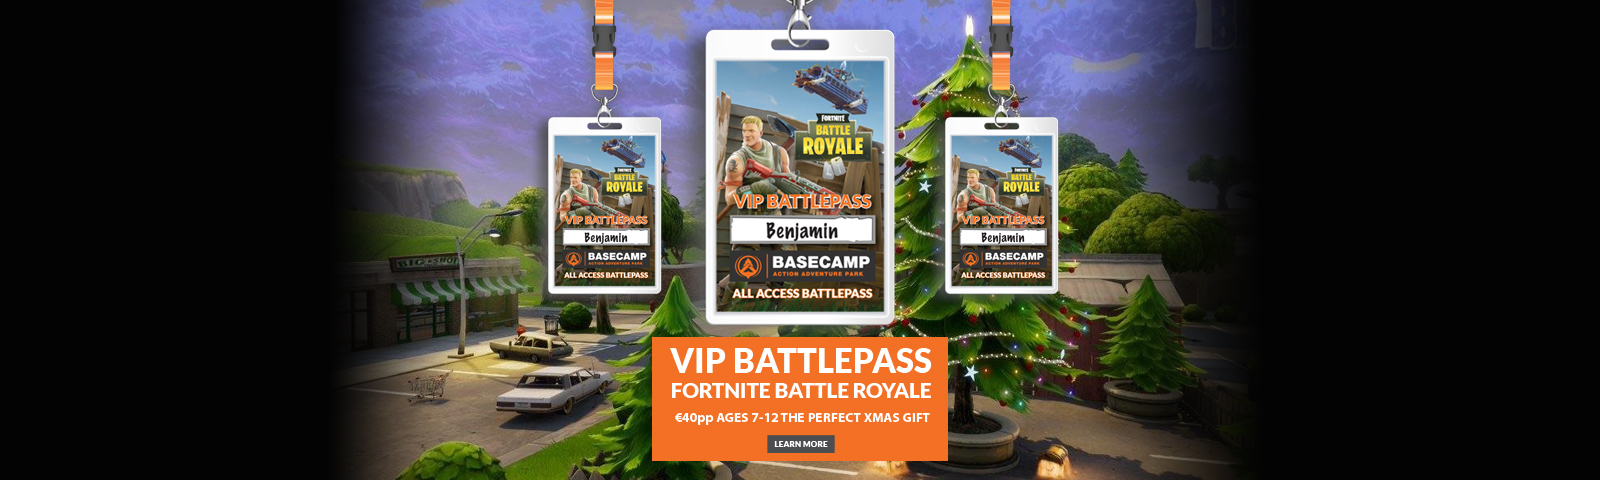 Fortnite VIP Battlepass - Basecamp Action Adventure Park - 1600 x 480 jpeg 428kB